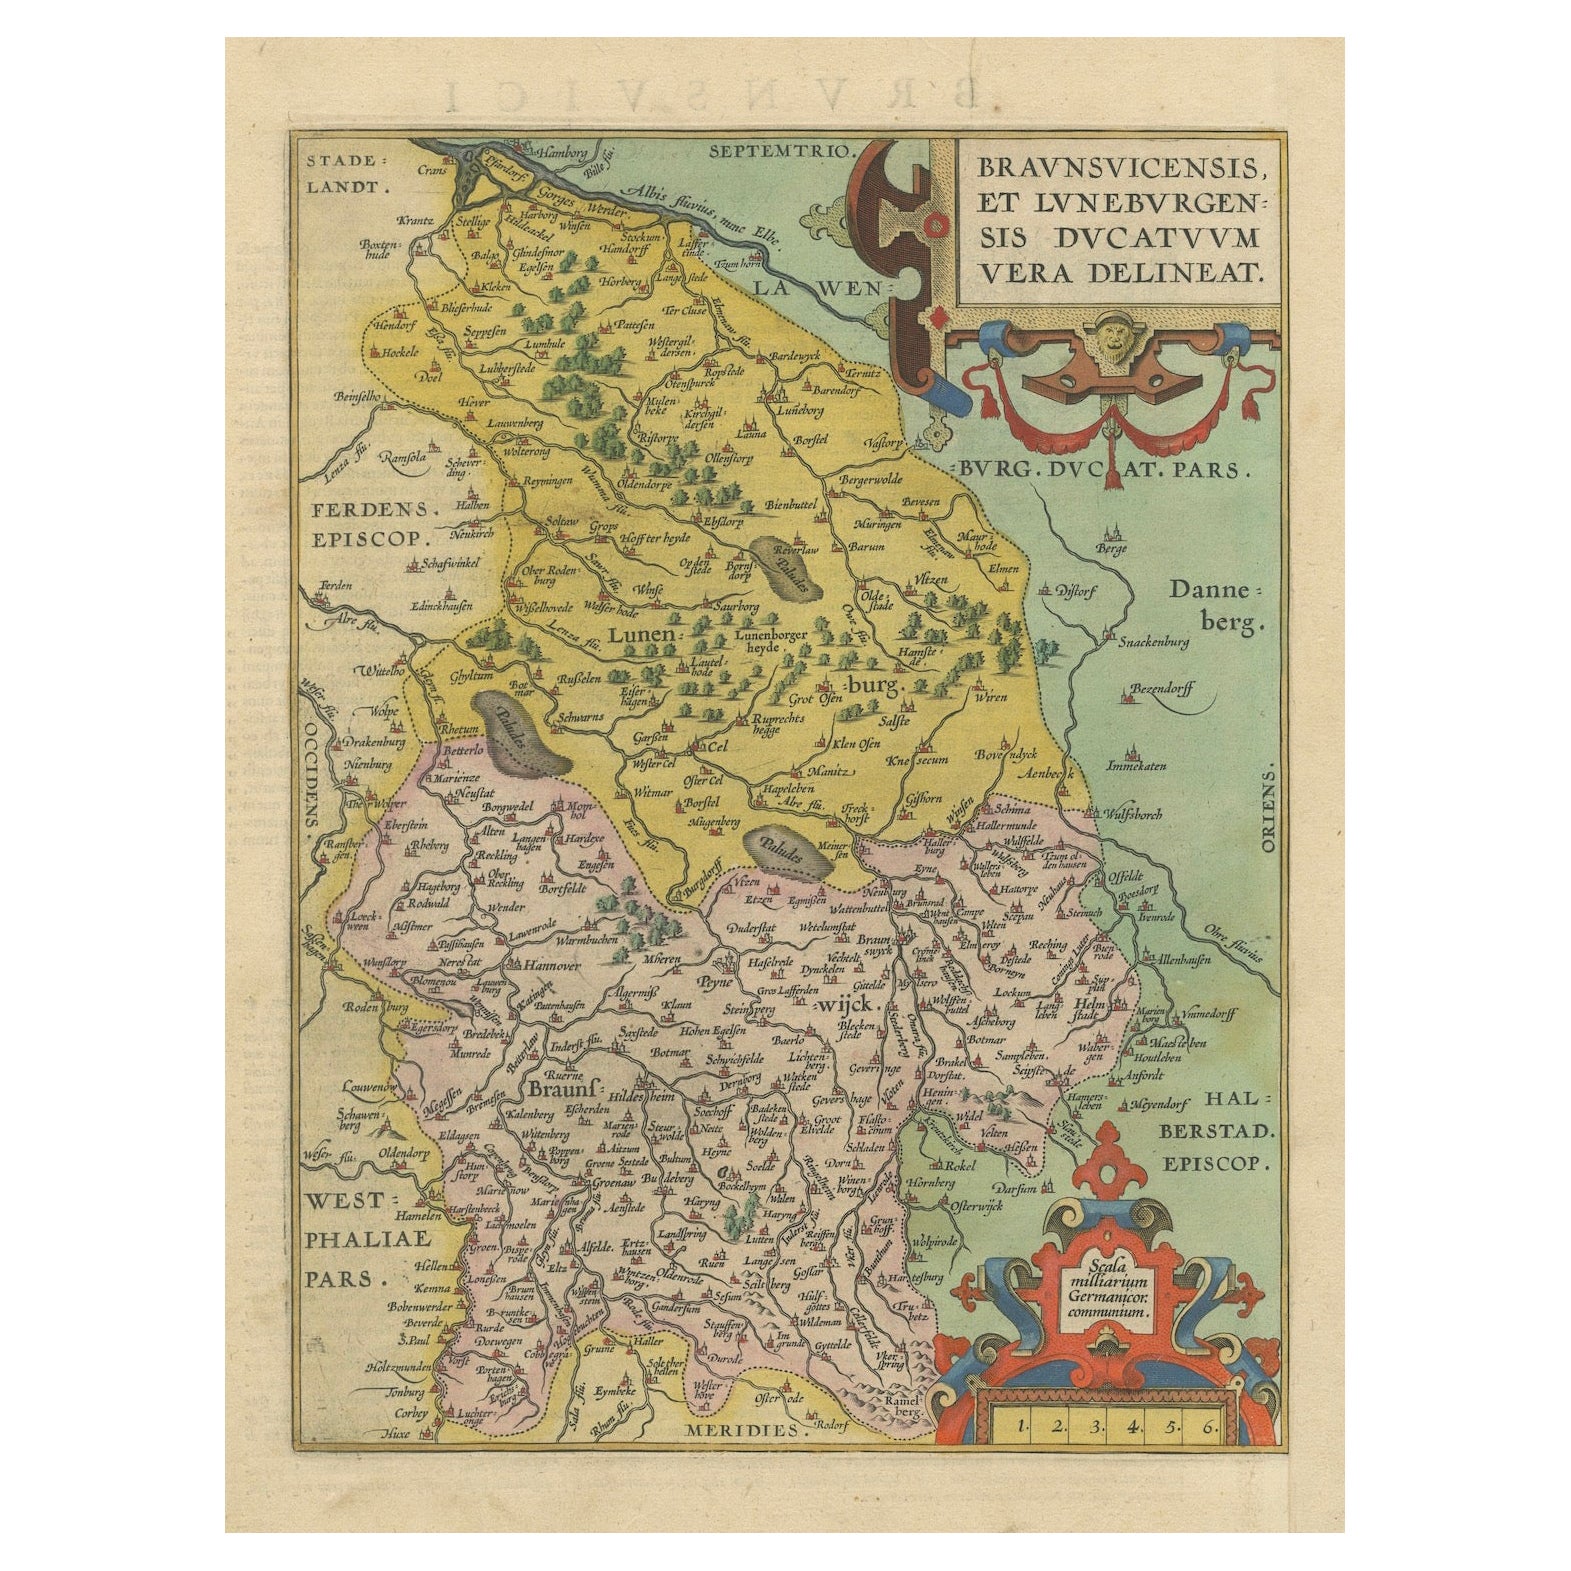 Duchy of Brunswick-Lüneburg, 1595: A Renaissance Cartographic Masterpiece